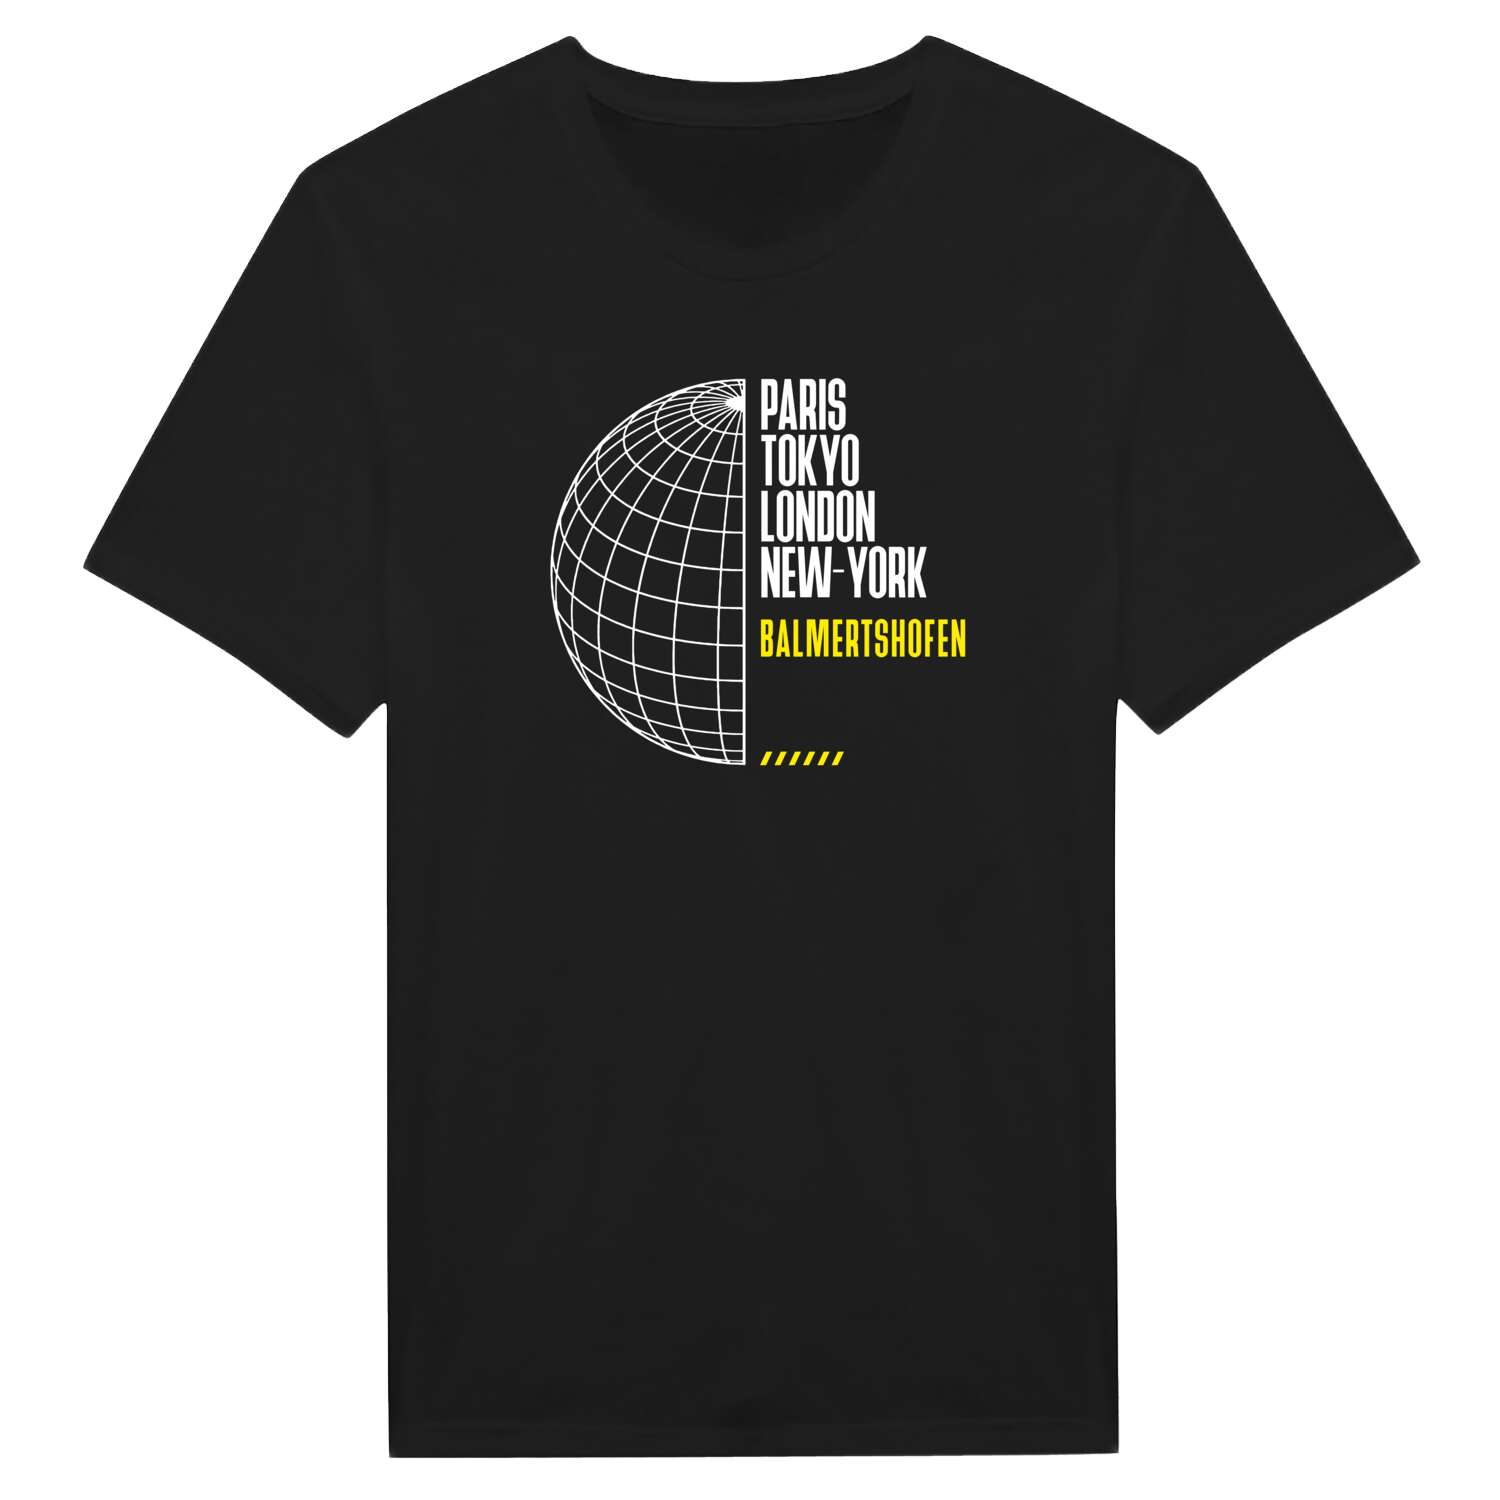 Balmertshofen T-Shirt »Paris Tokyo London«